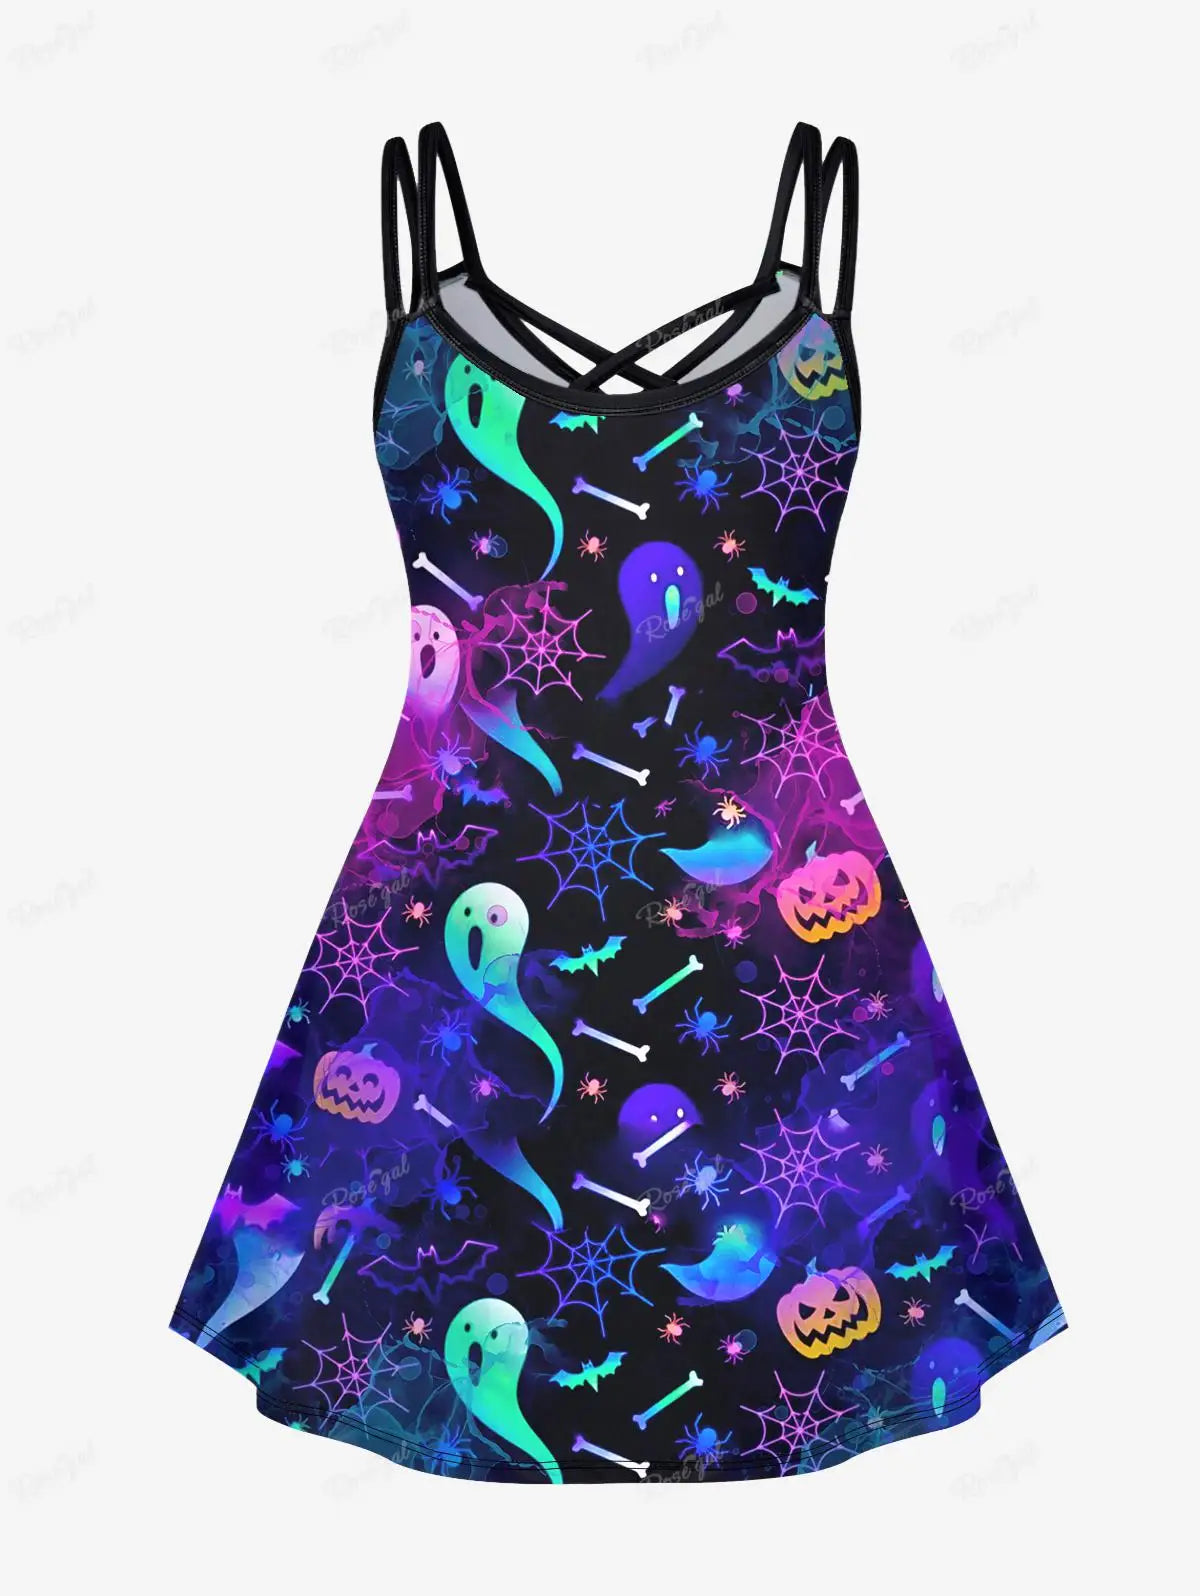 **Spooky Women's Dresses XS-6X**  
Ghost, Pumpkin, Bat, Spider Web Print Crisscross Cami Dress in Colorful Styled